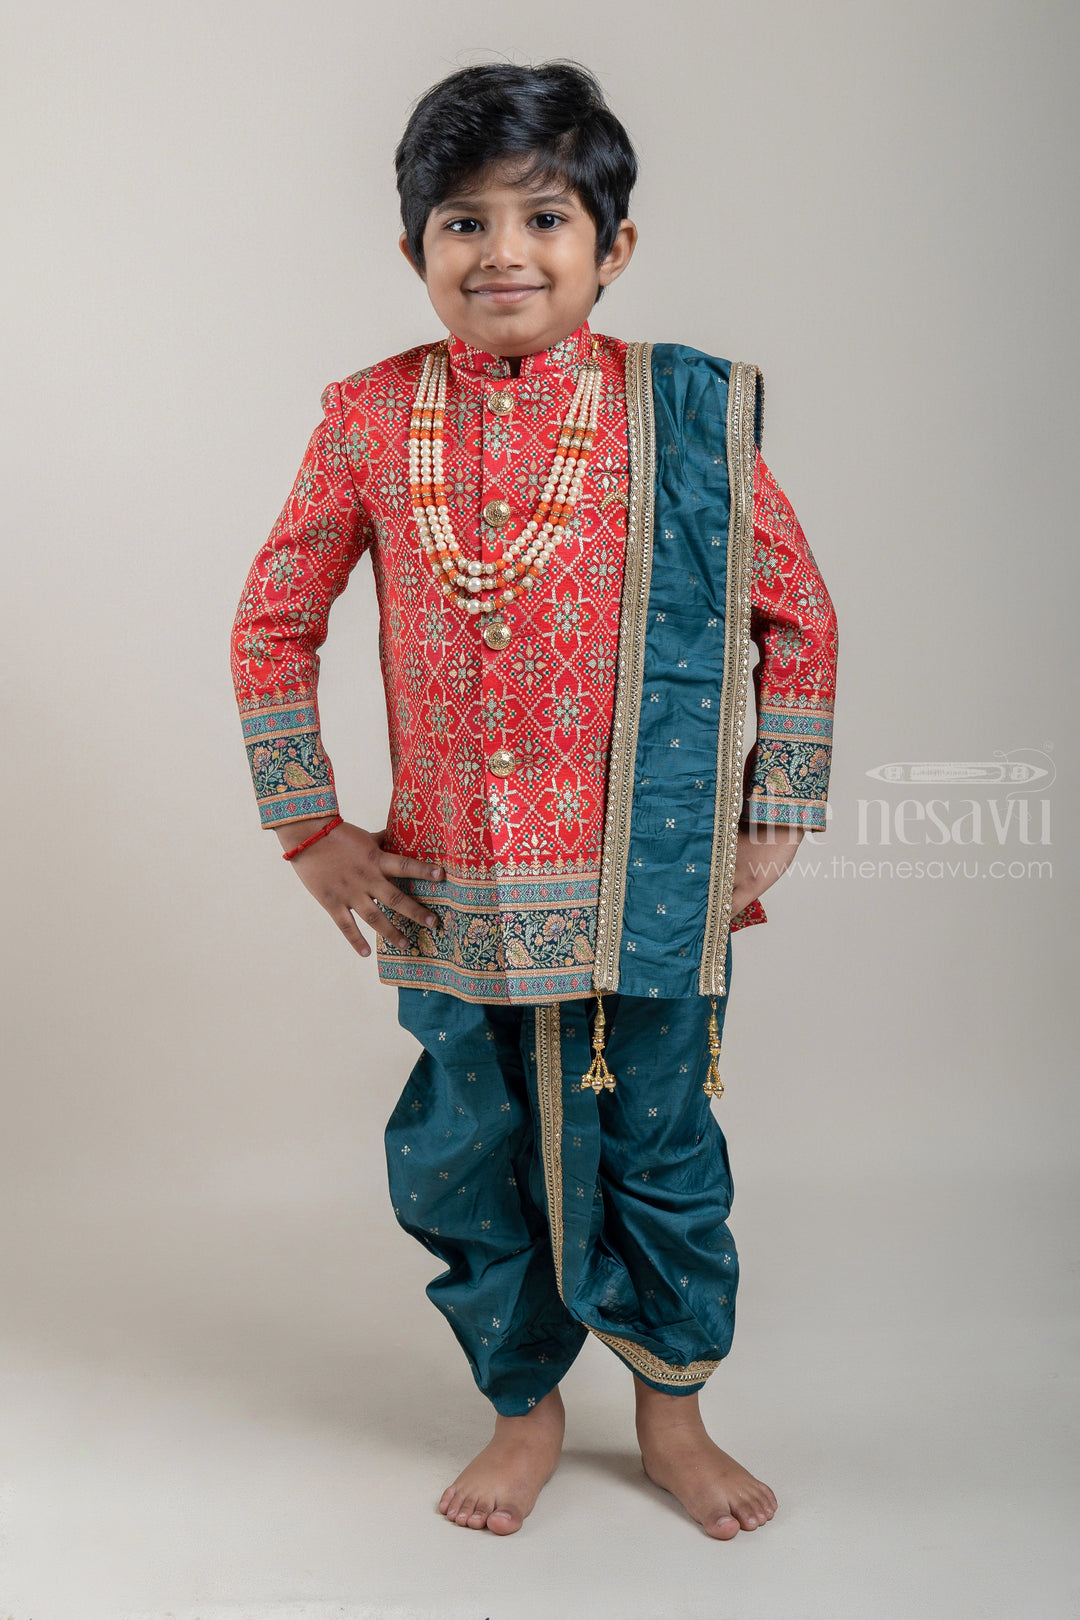 Boys Ethnic – The Nesavu